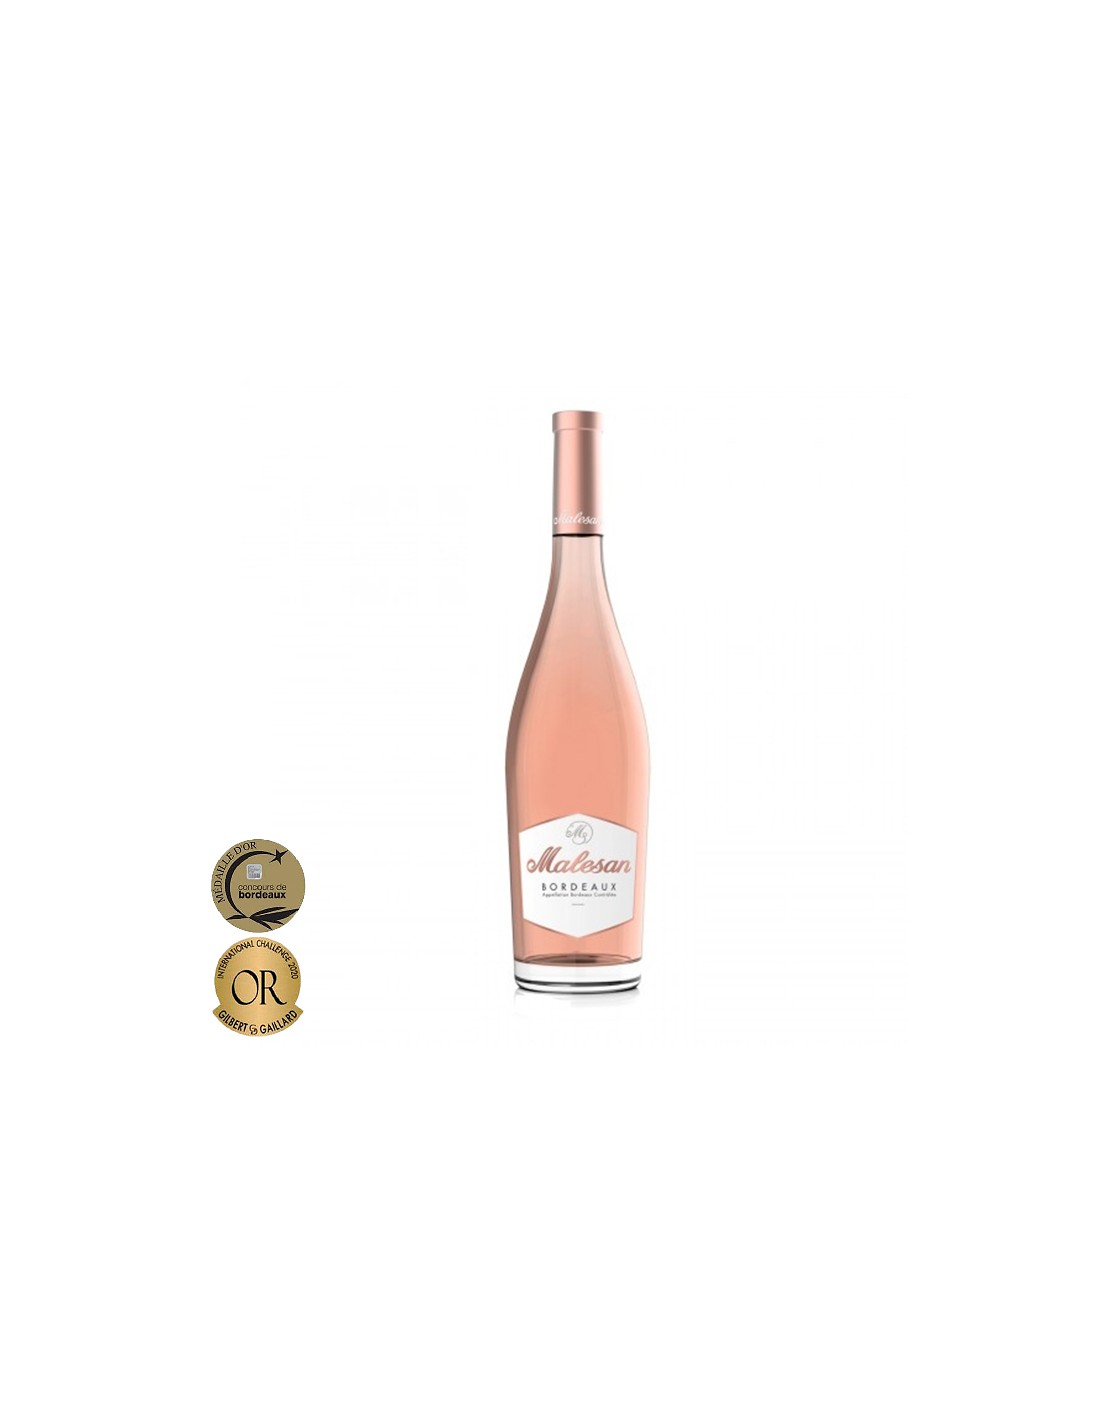 Vin roze sec, Malesan Bordeaux, 12.5% alc., 0.75L, Franta